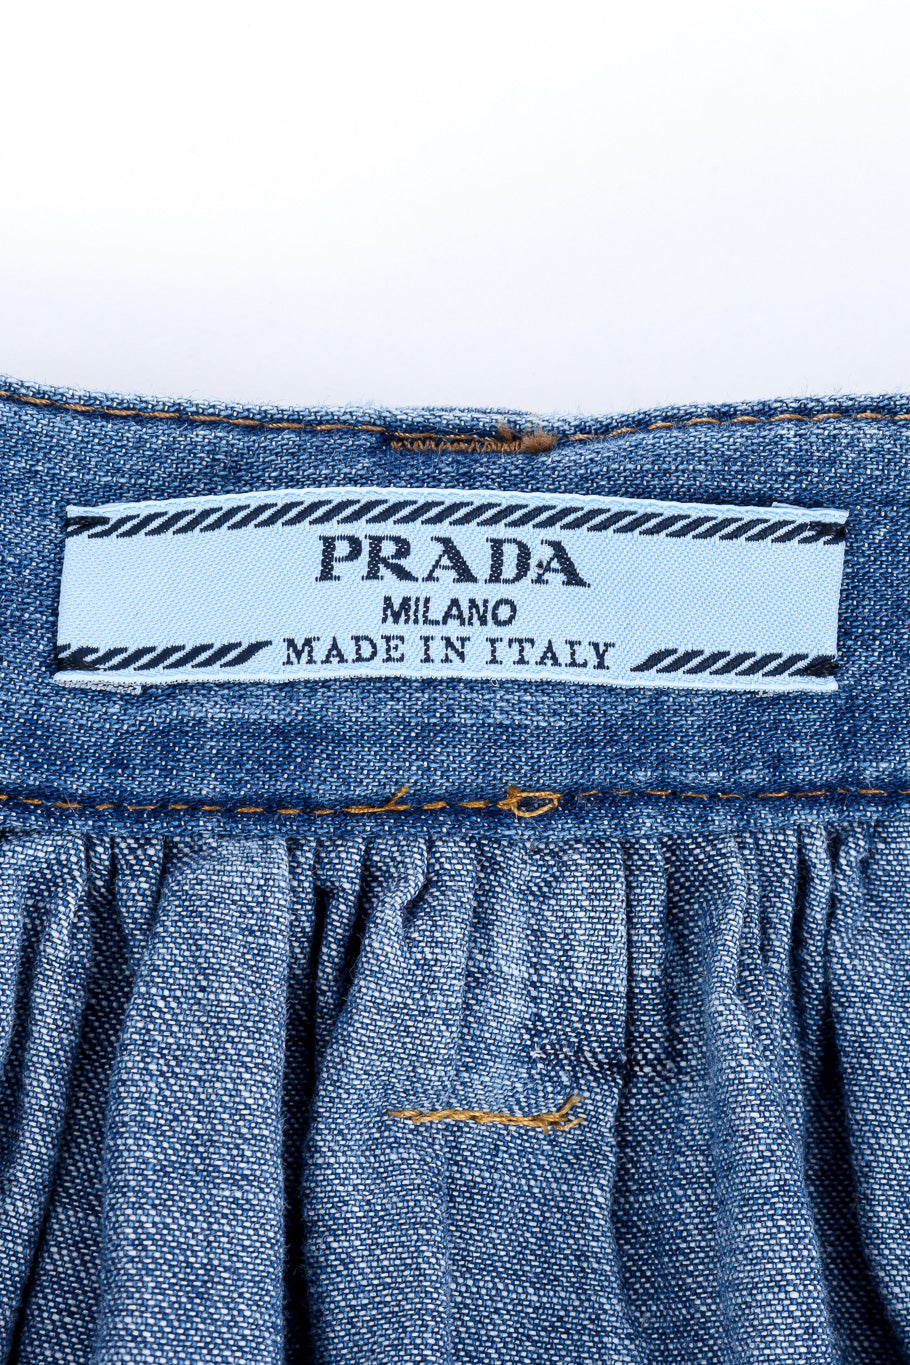 Prada denim peasant skirt designer label @recessla